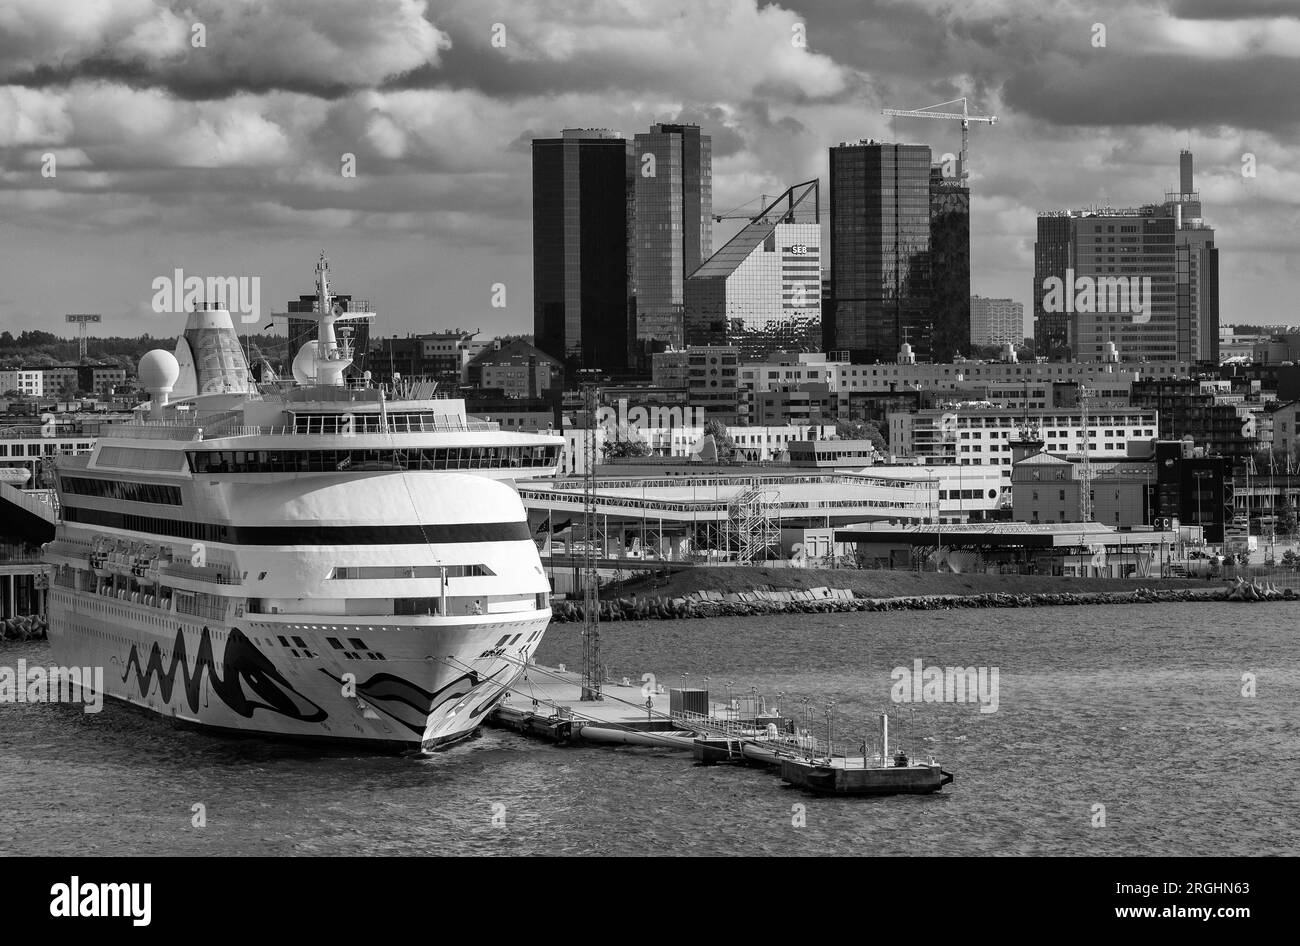 Cruise ship in Tallinn, Estonia Stock Photo